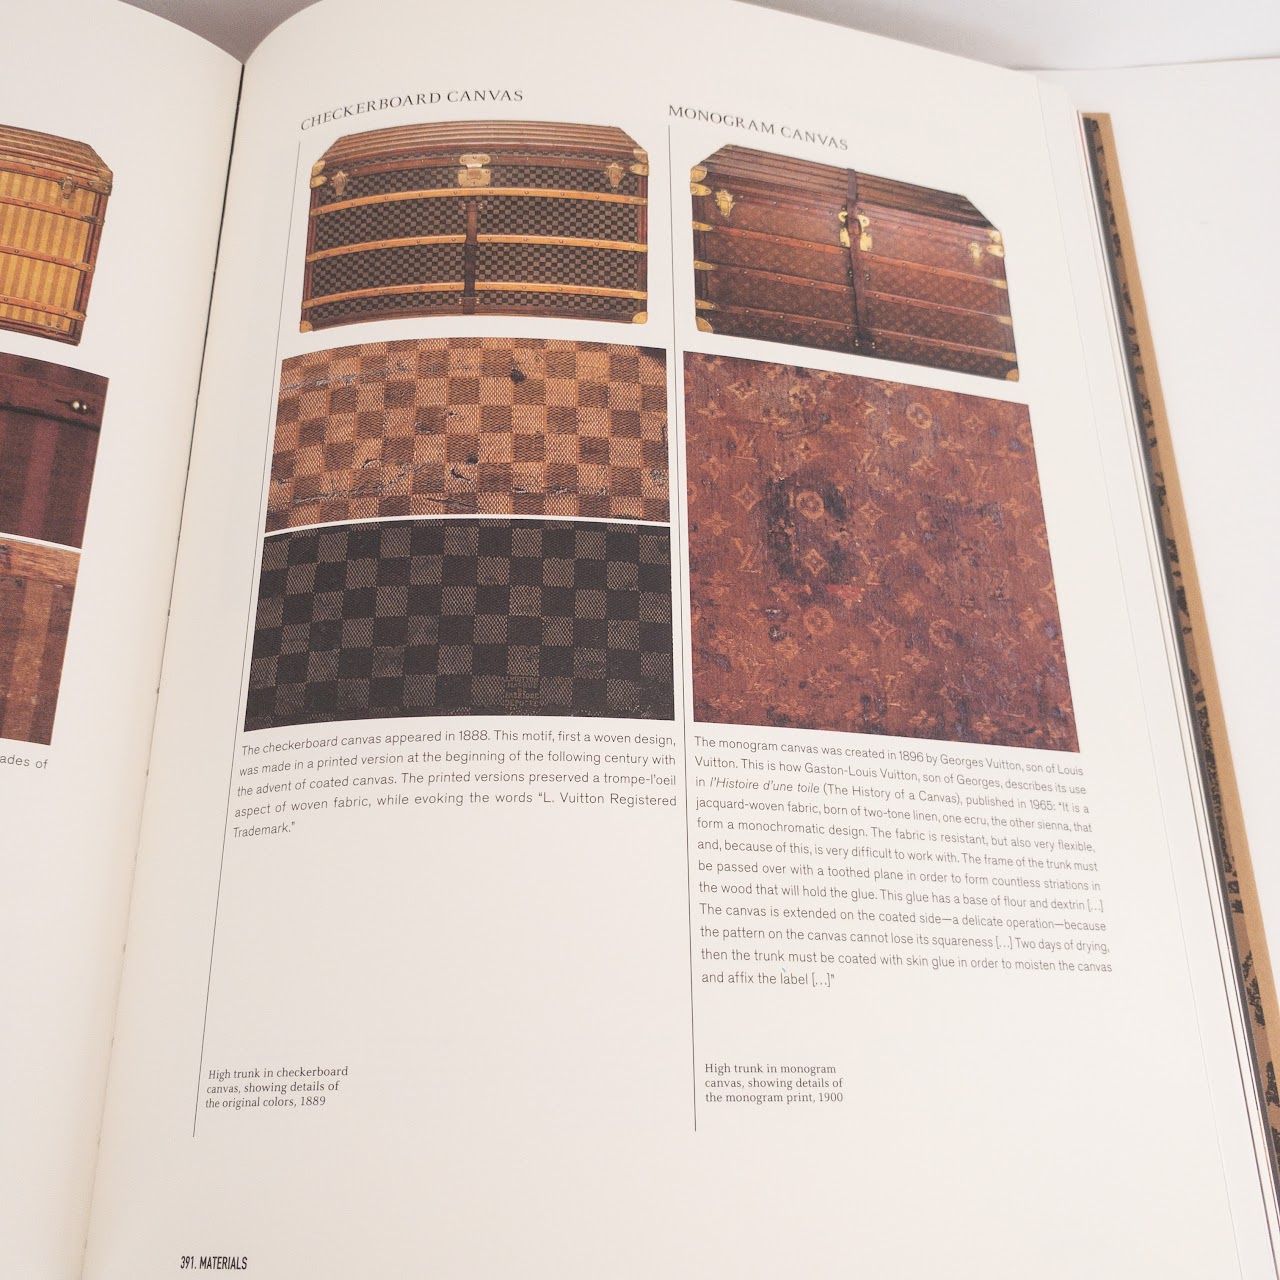 Louis Vuitton: 100 Legendary Trunks book by Pierre Leonforte